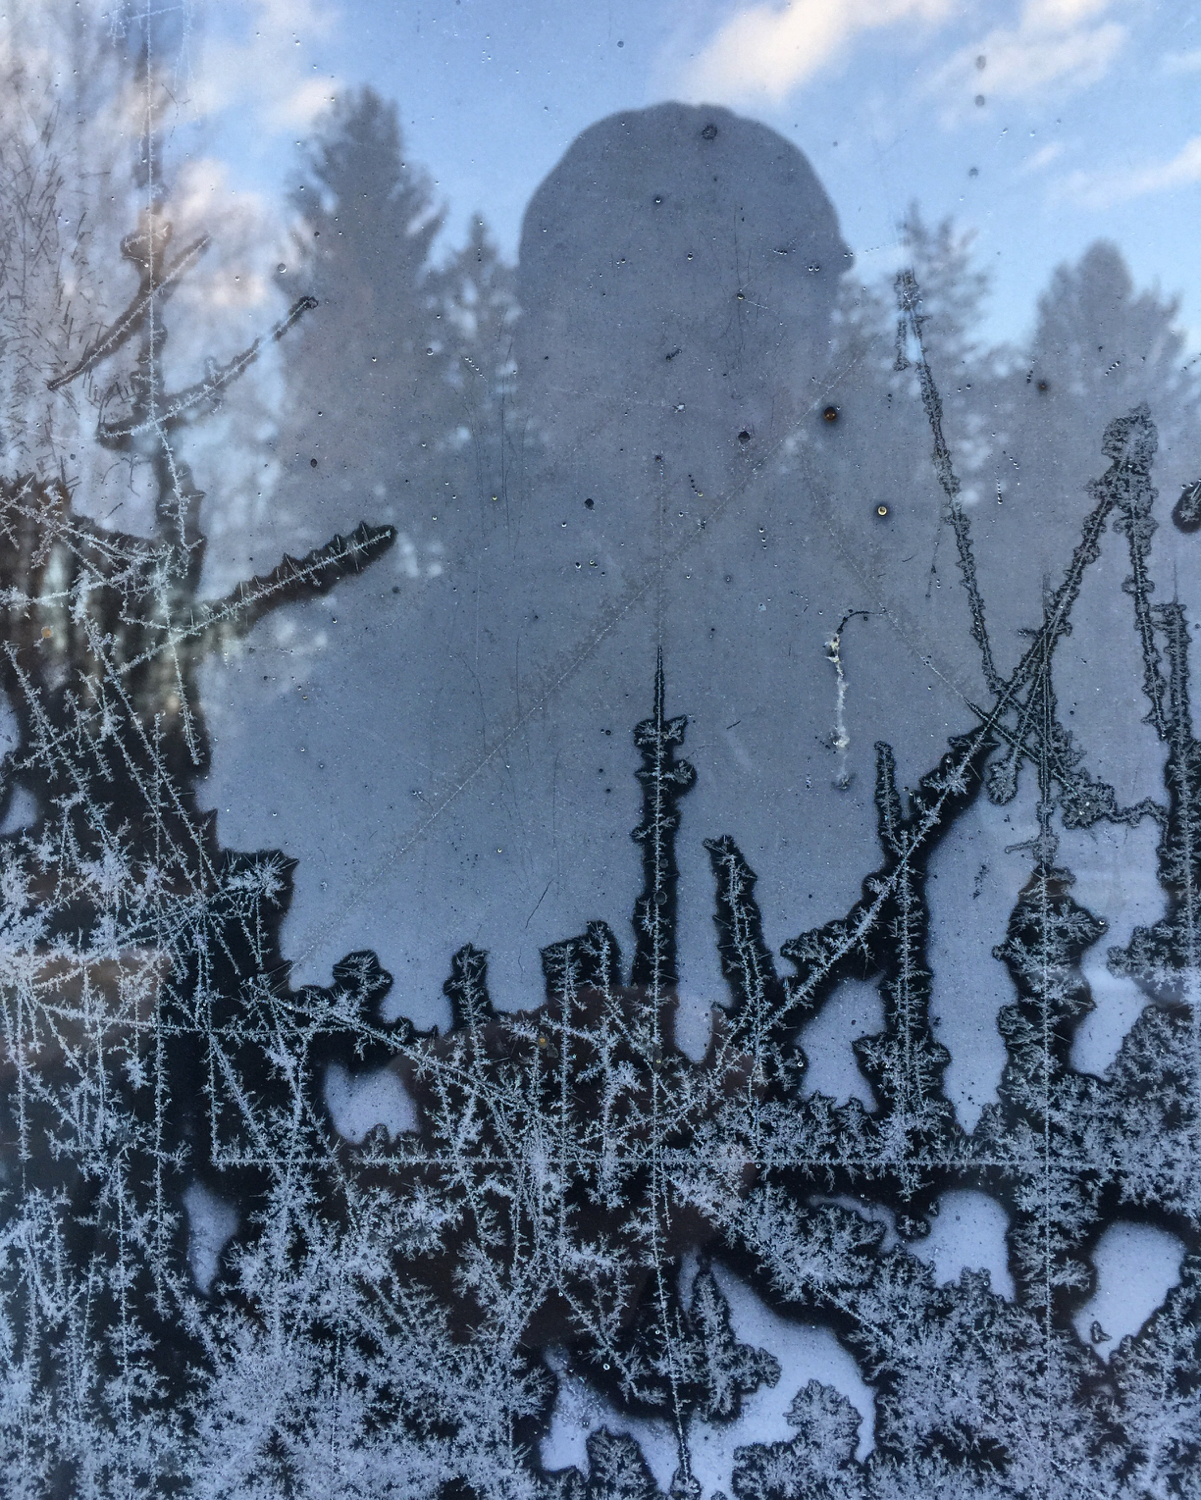 Frosty window pane — copyright Trace Meek